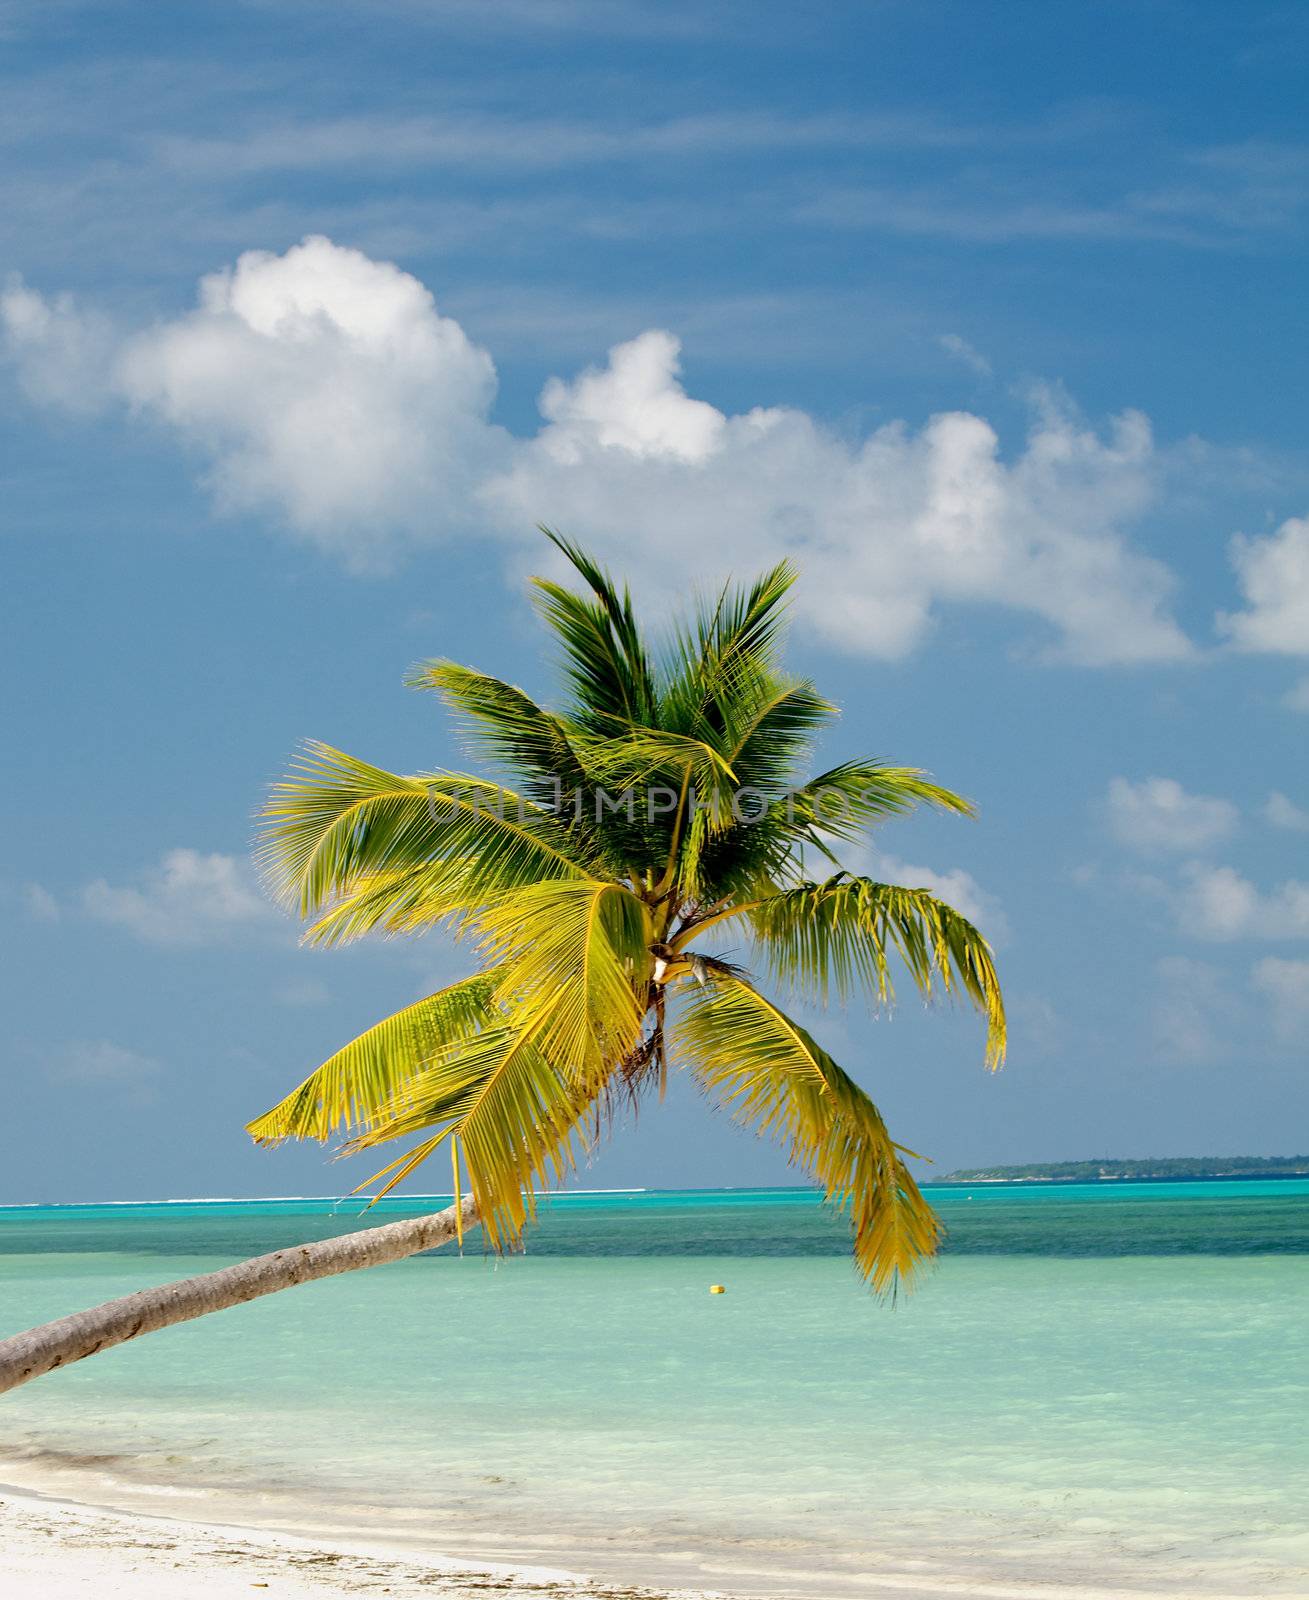 Beautifil Single Palm Tree over Ocean Beach on Blue Sky background